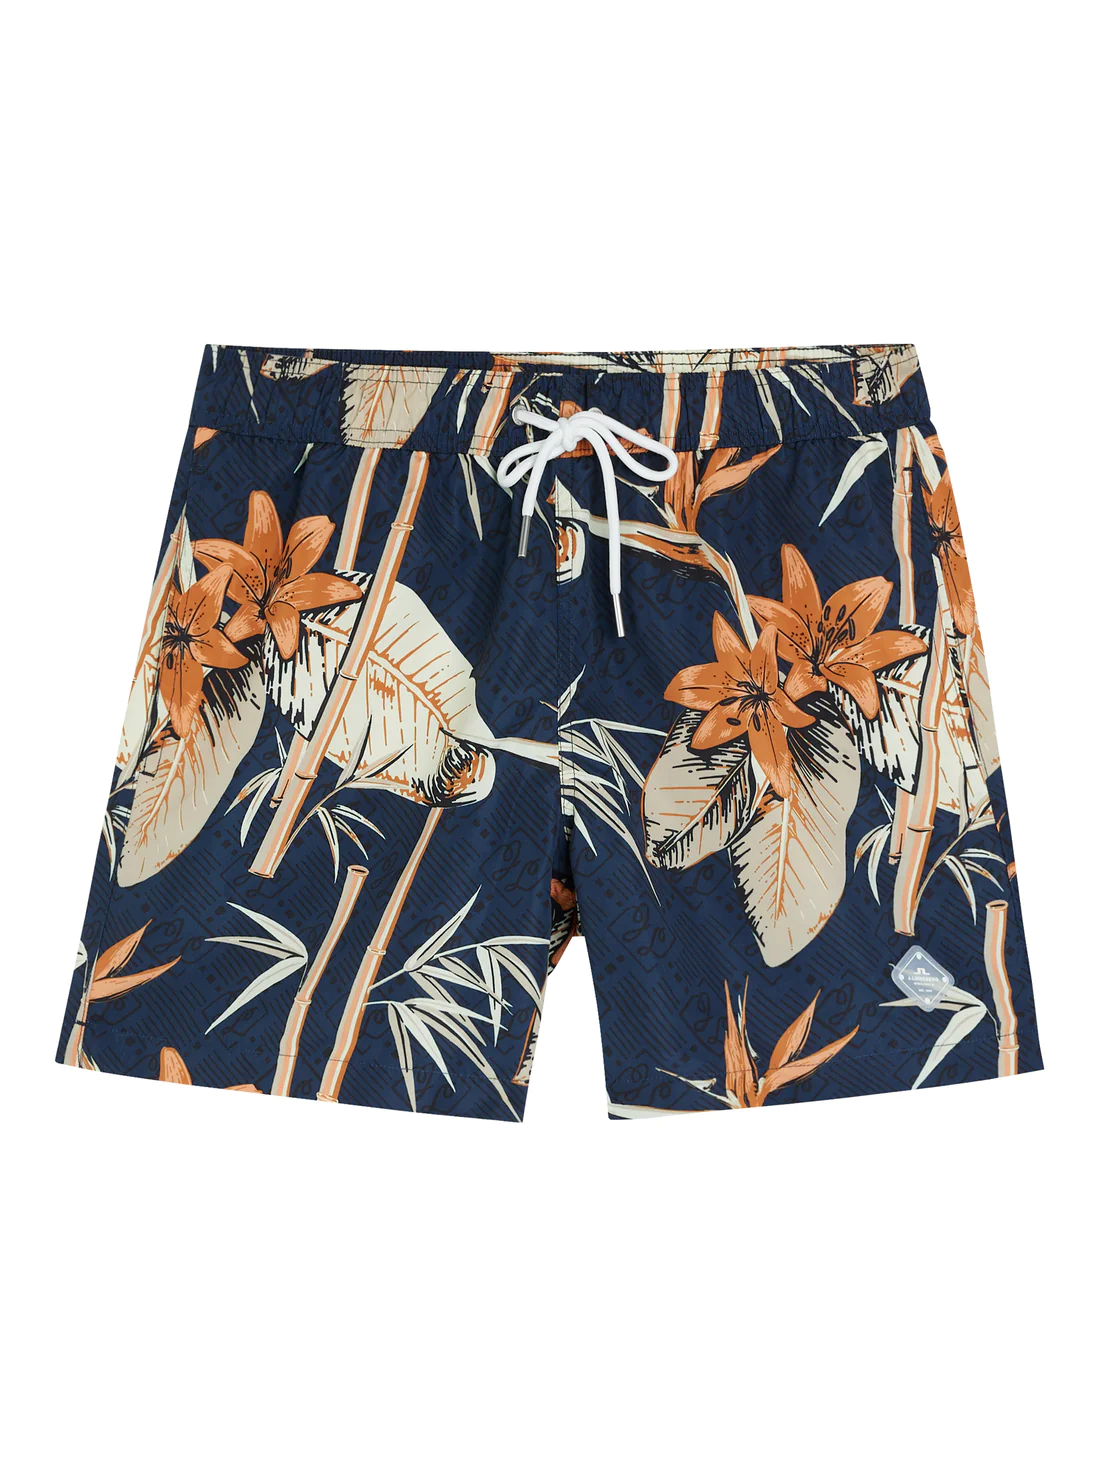 J LINDEBERG Banks tropical swim trunks